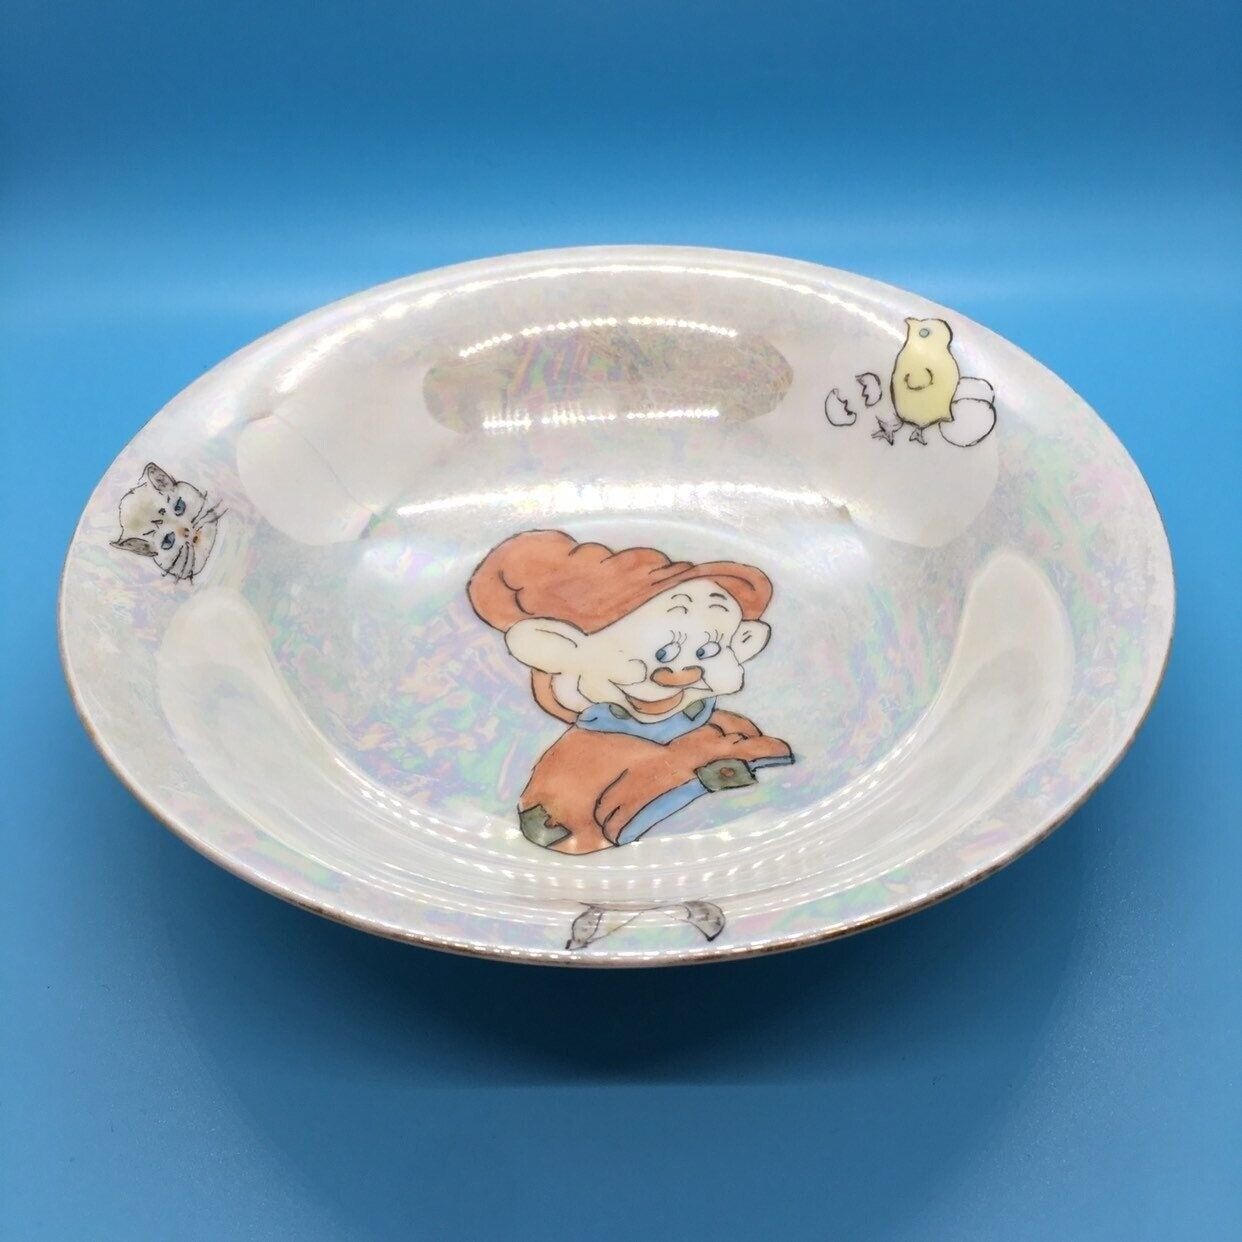 Snow White’s Dopey iridescent Vintage Childs Bowl - Disneyana - Very Rare